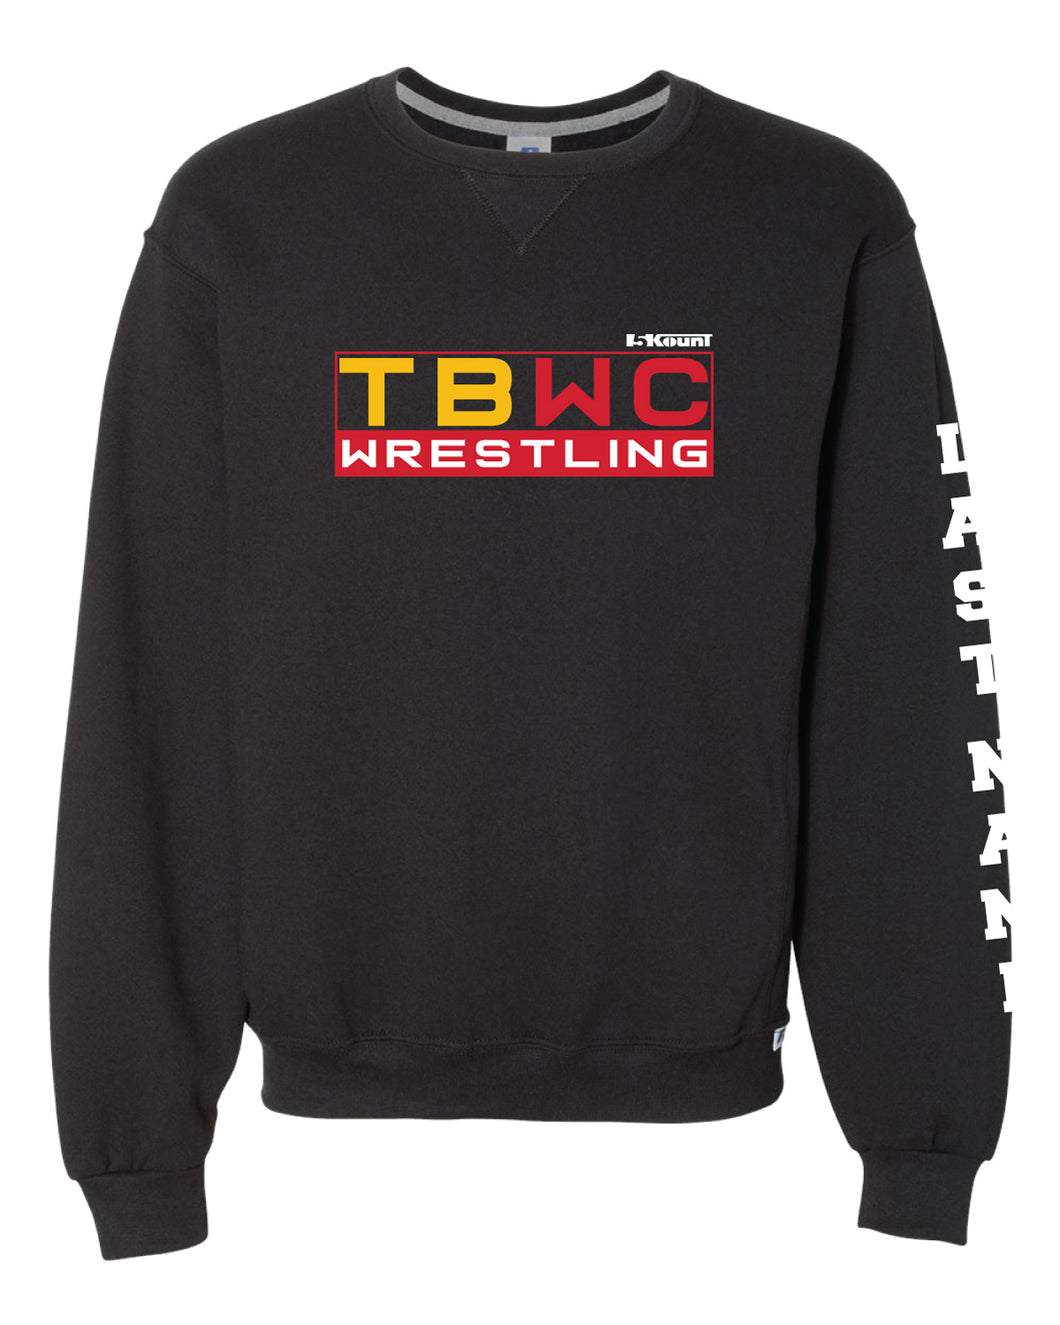 TBWC Wrestling Russell Athletic Cotton Crewneck Sweatshirt - Black - 5KounT2018